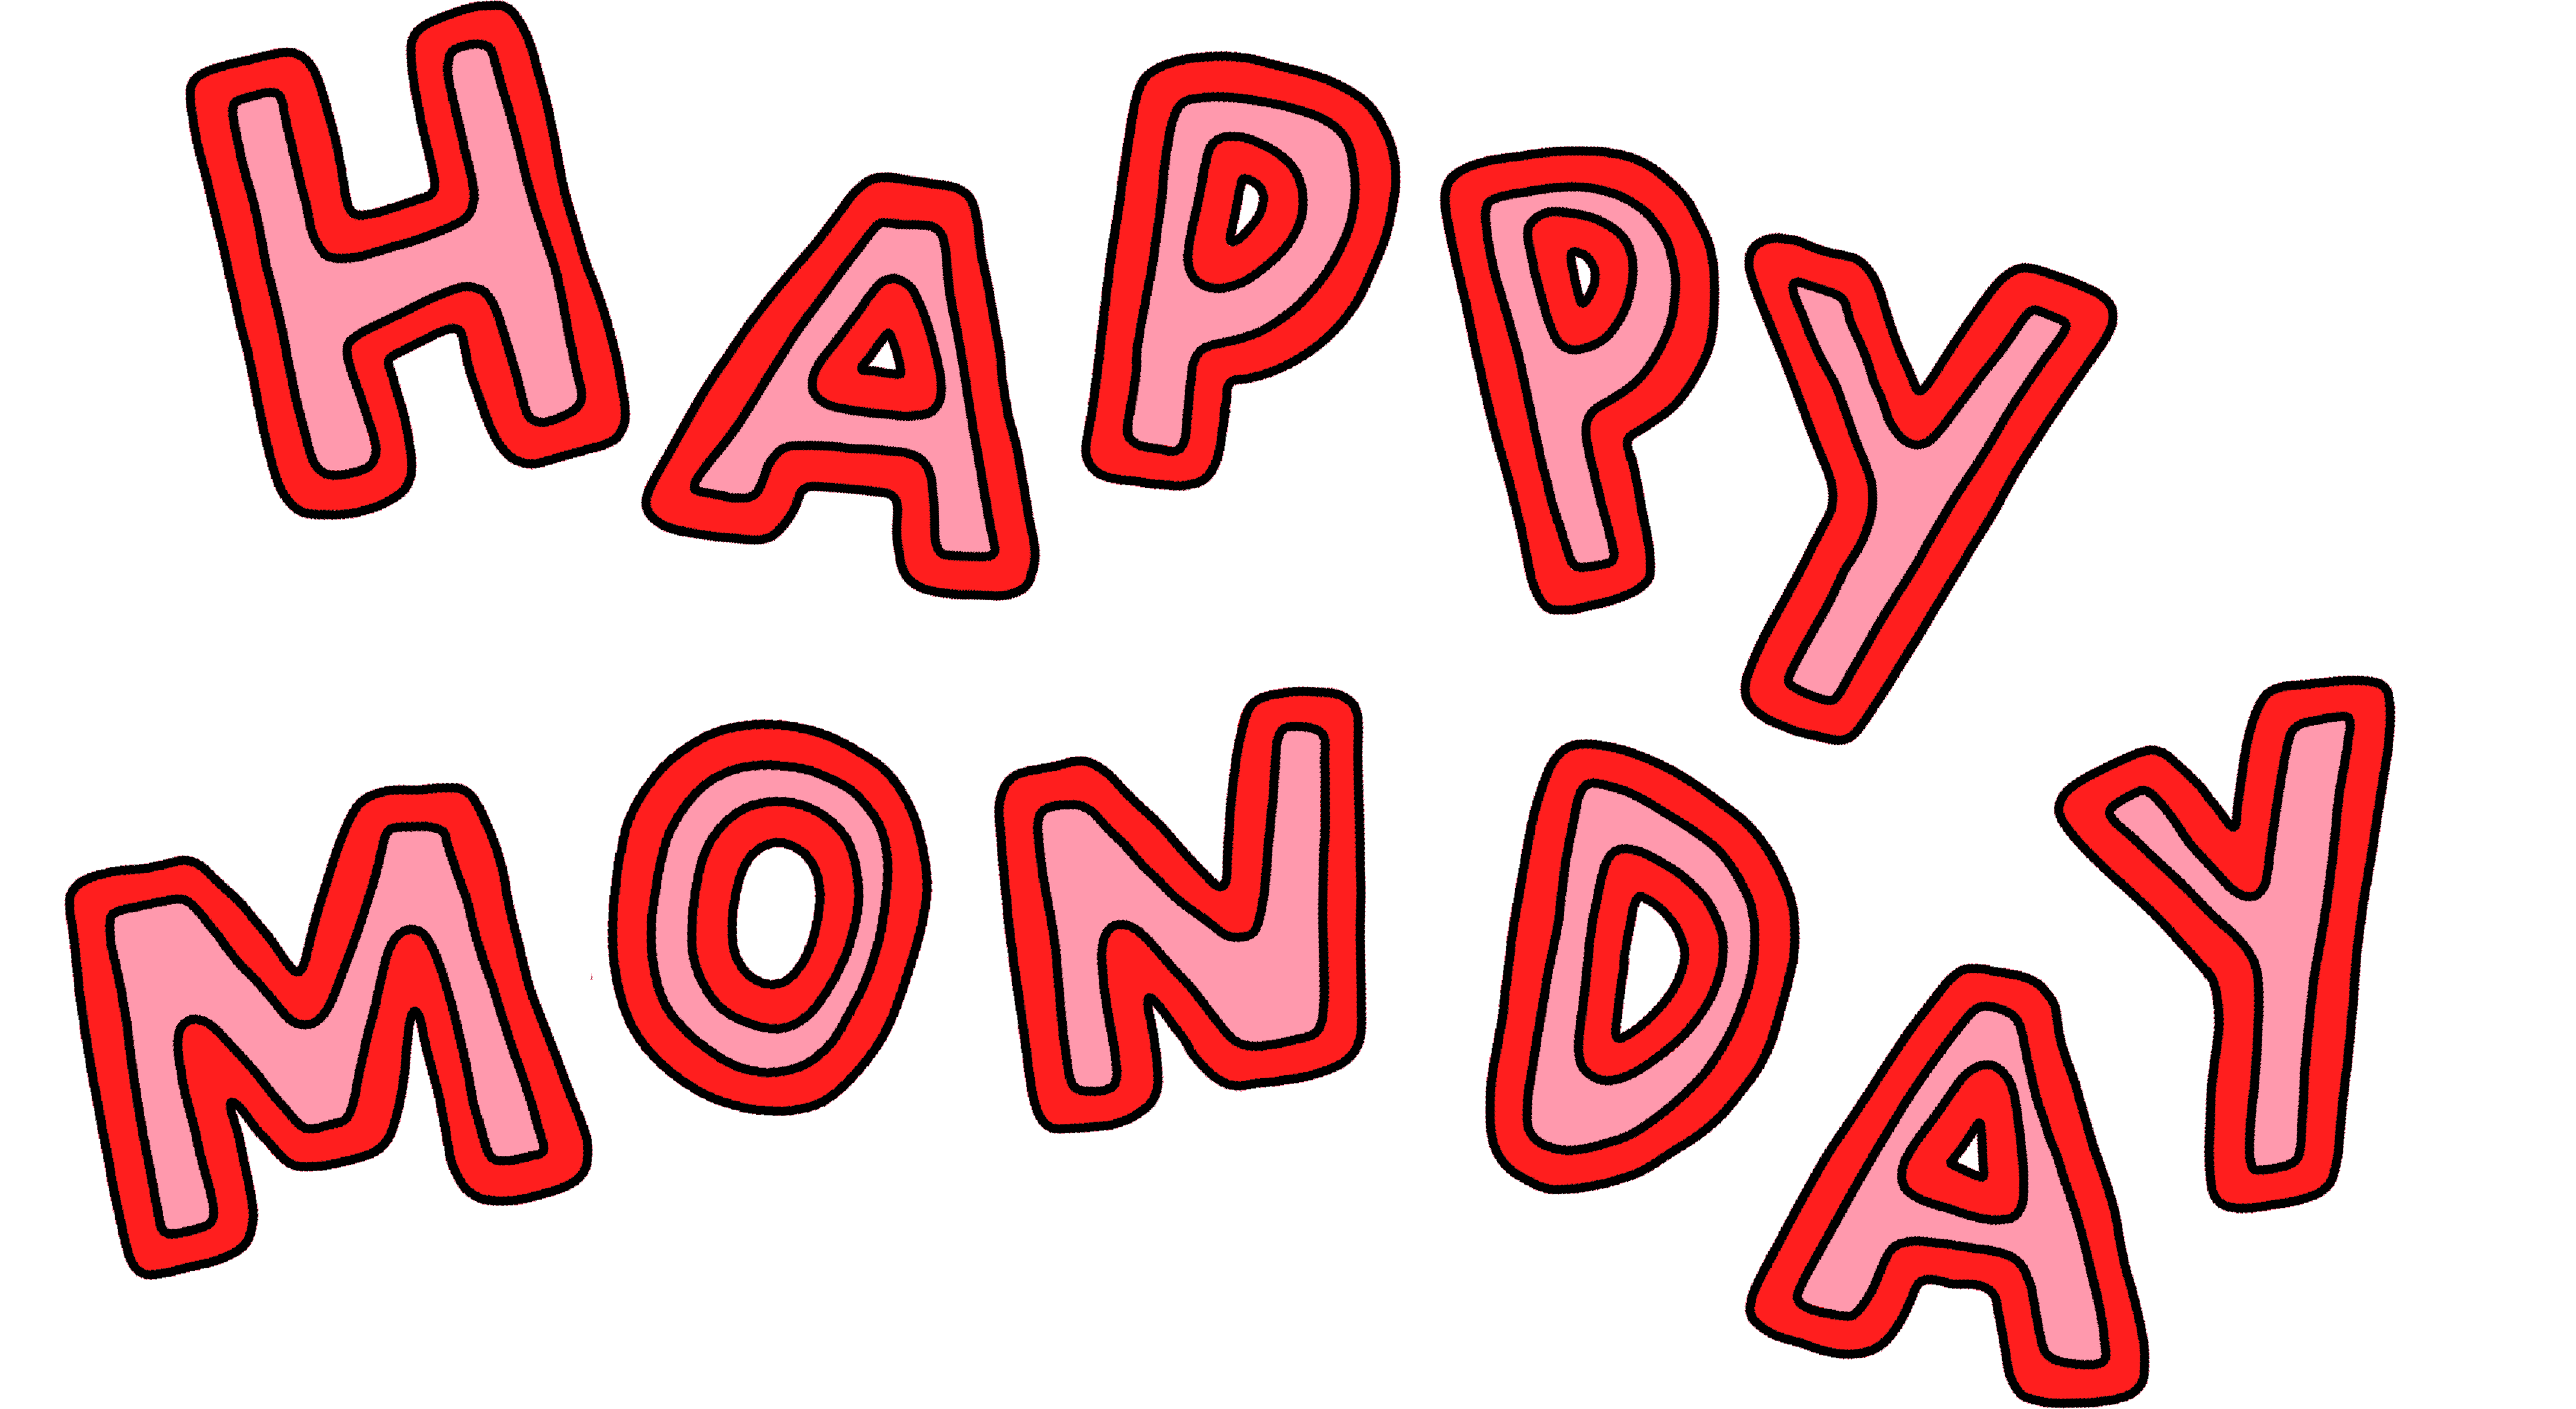 Happy Monday Gif Animated Monday Giphy Mondays Stempel Bodbocwasuon